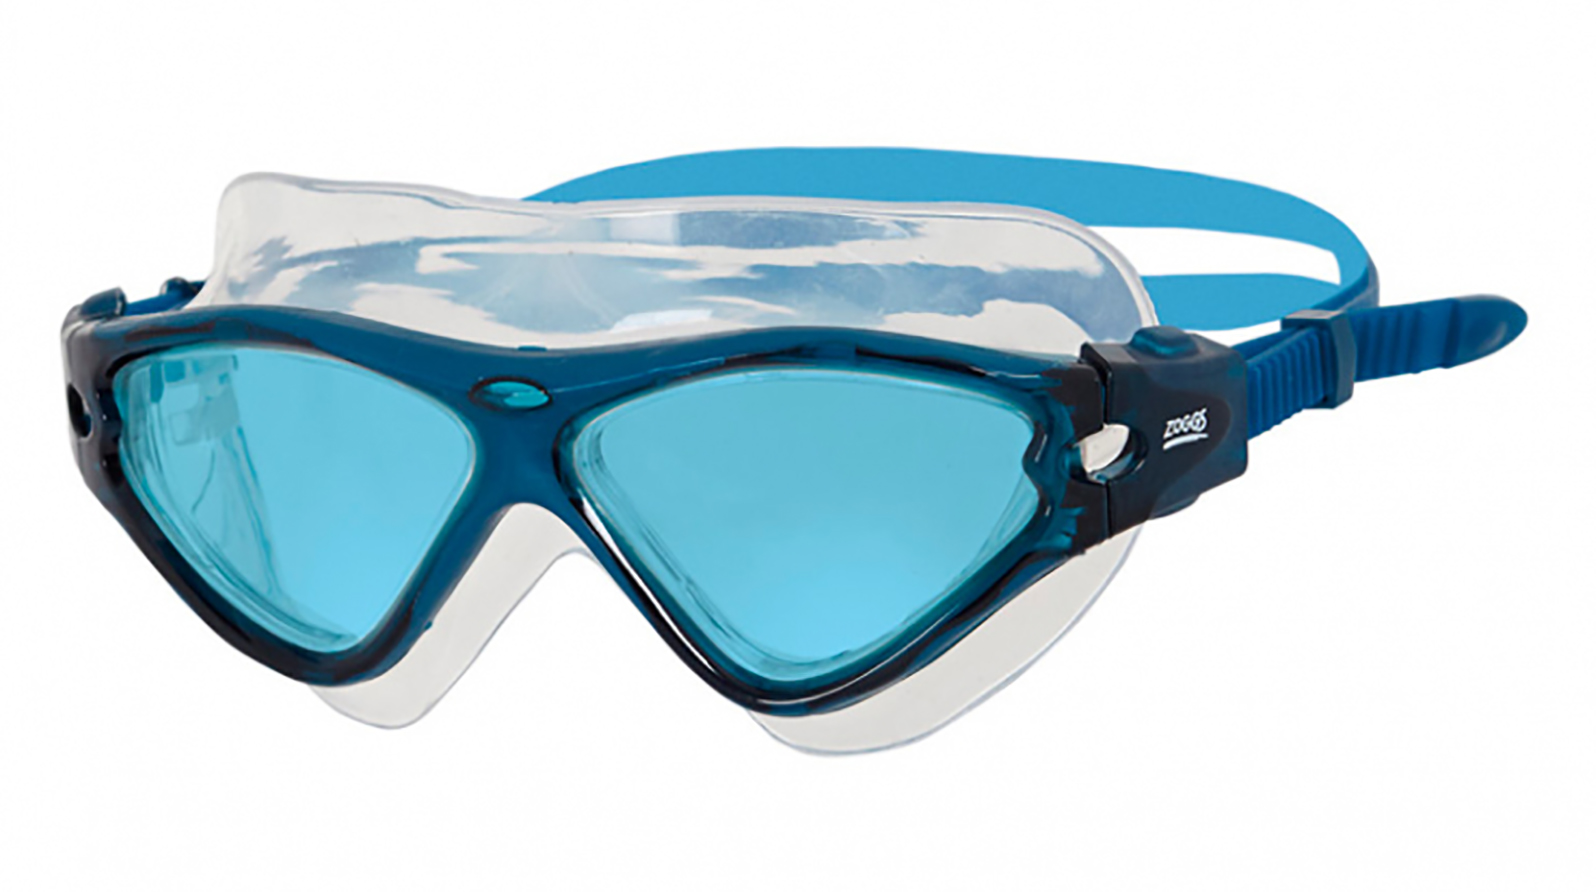 ZOGGS Очки для плавания Tri-vision Mask (синий/голубой) zoggs очки для плавания raptor hcb mirror золото